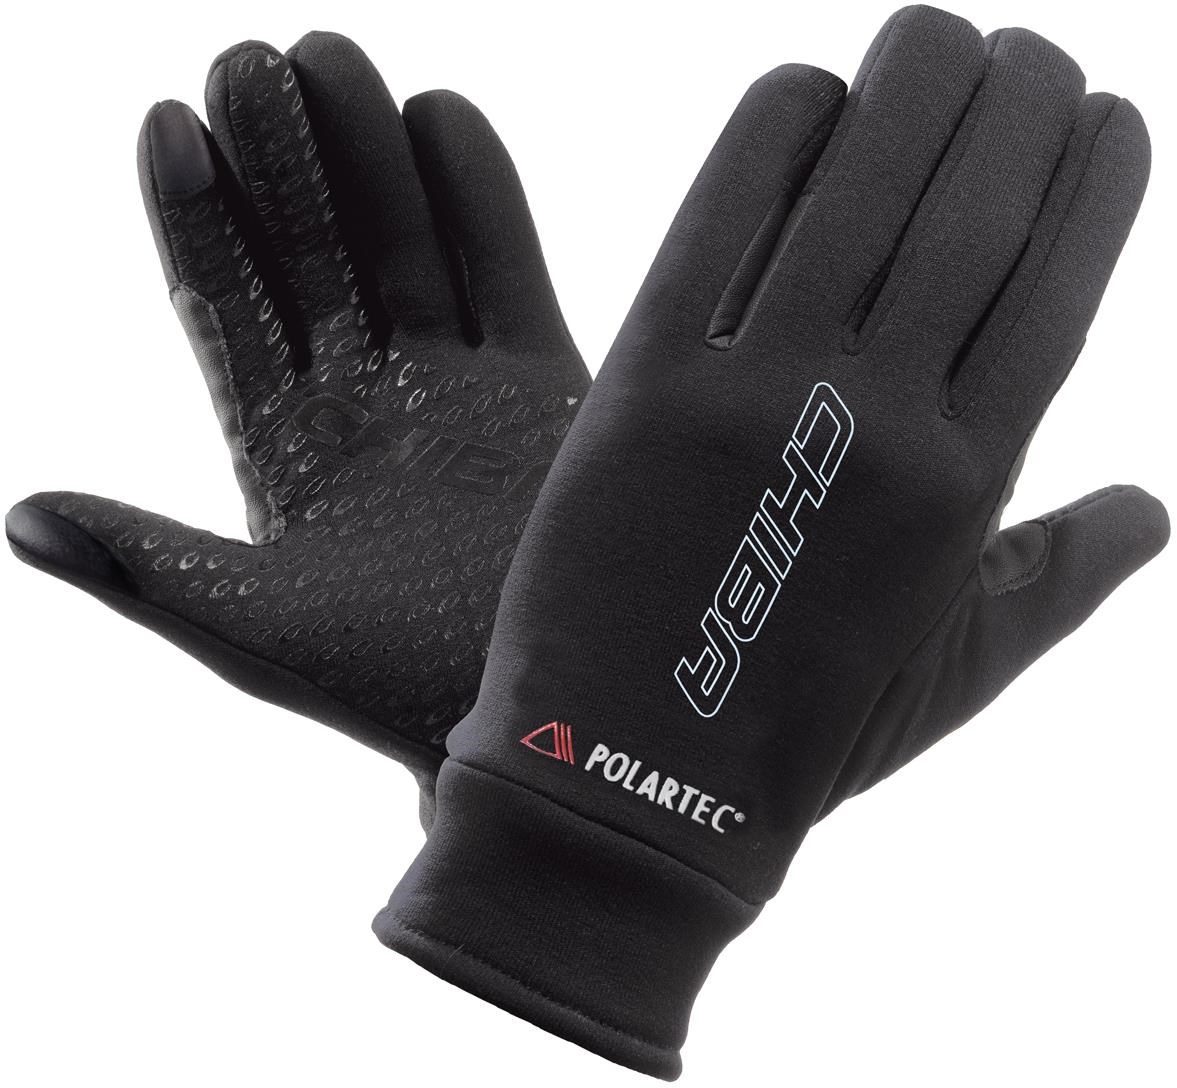 Chiba Polartec Fleece Long Finger Cycling Gloves product image